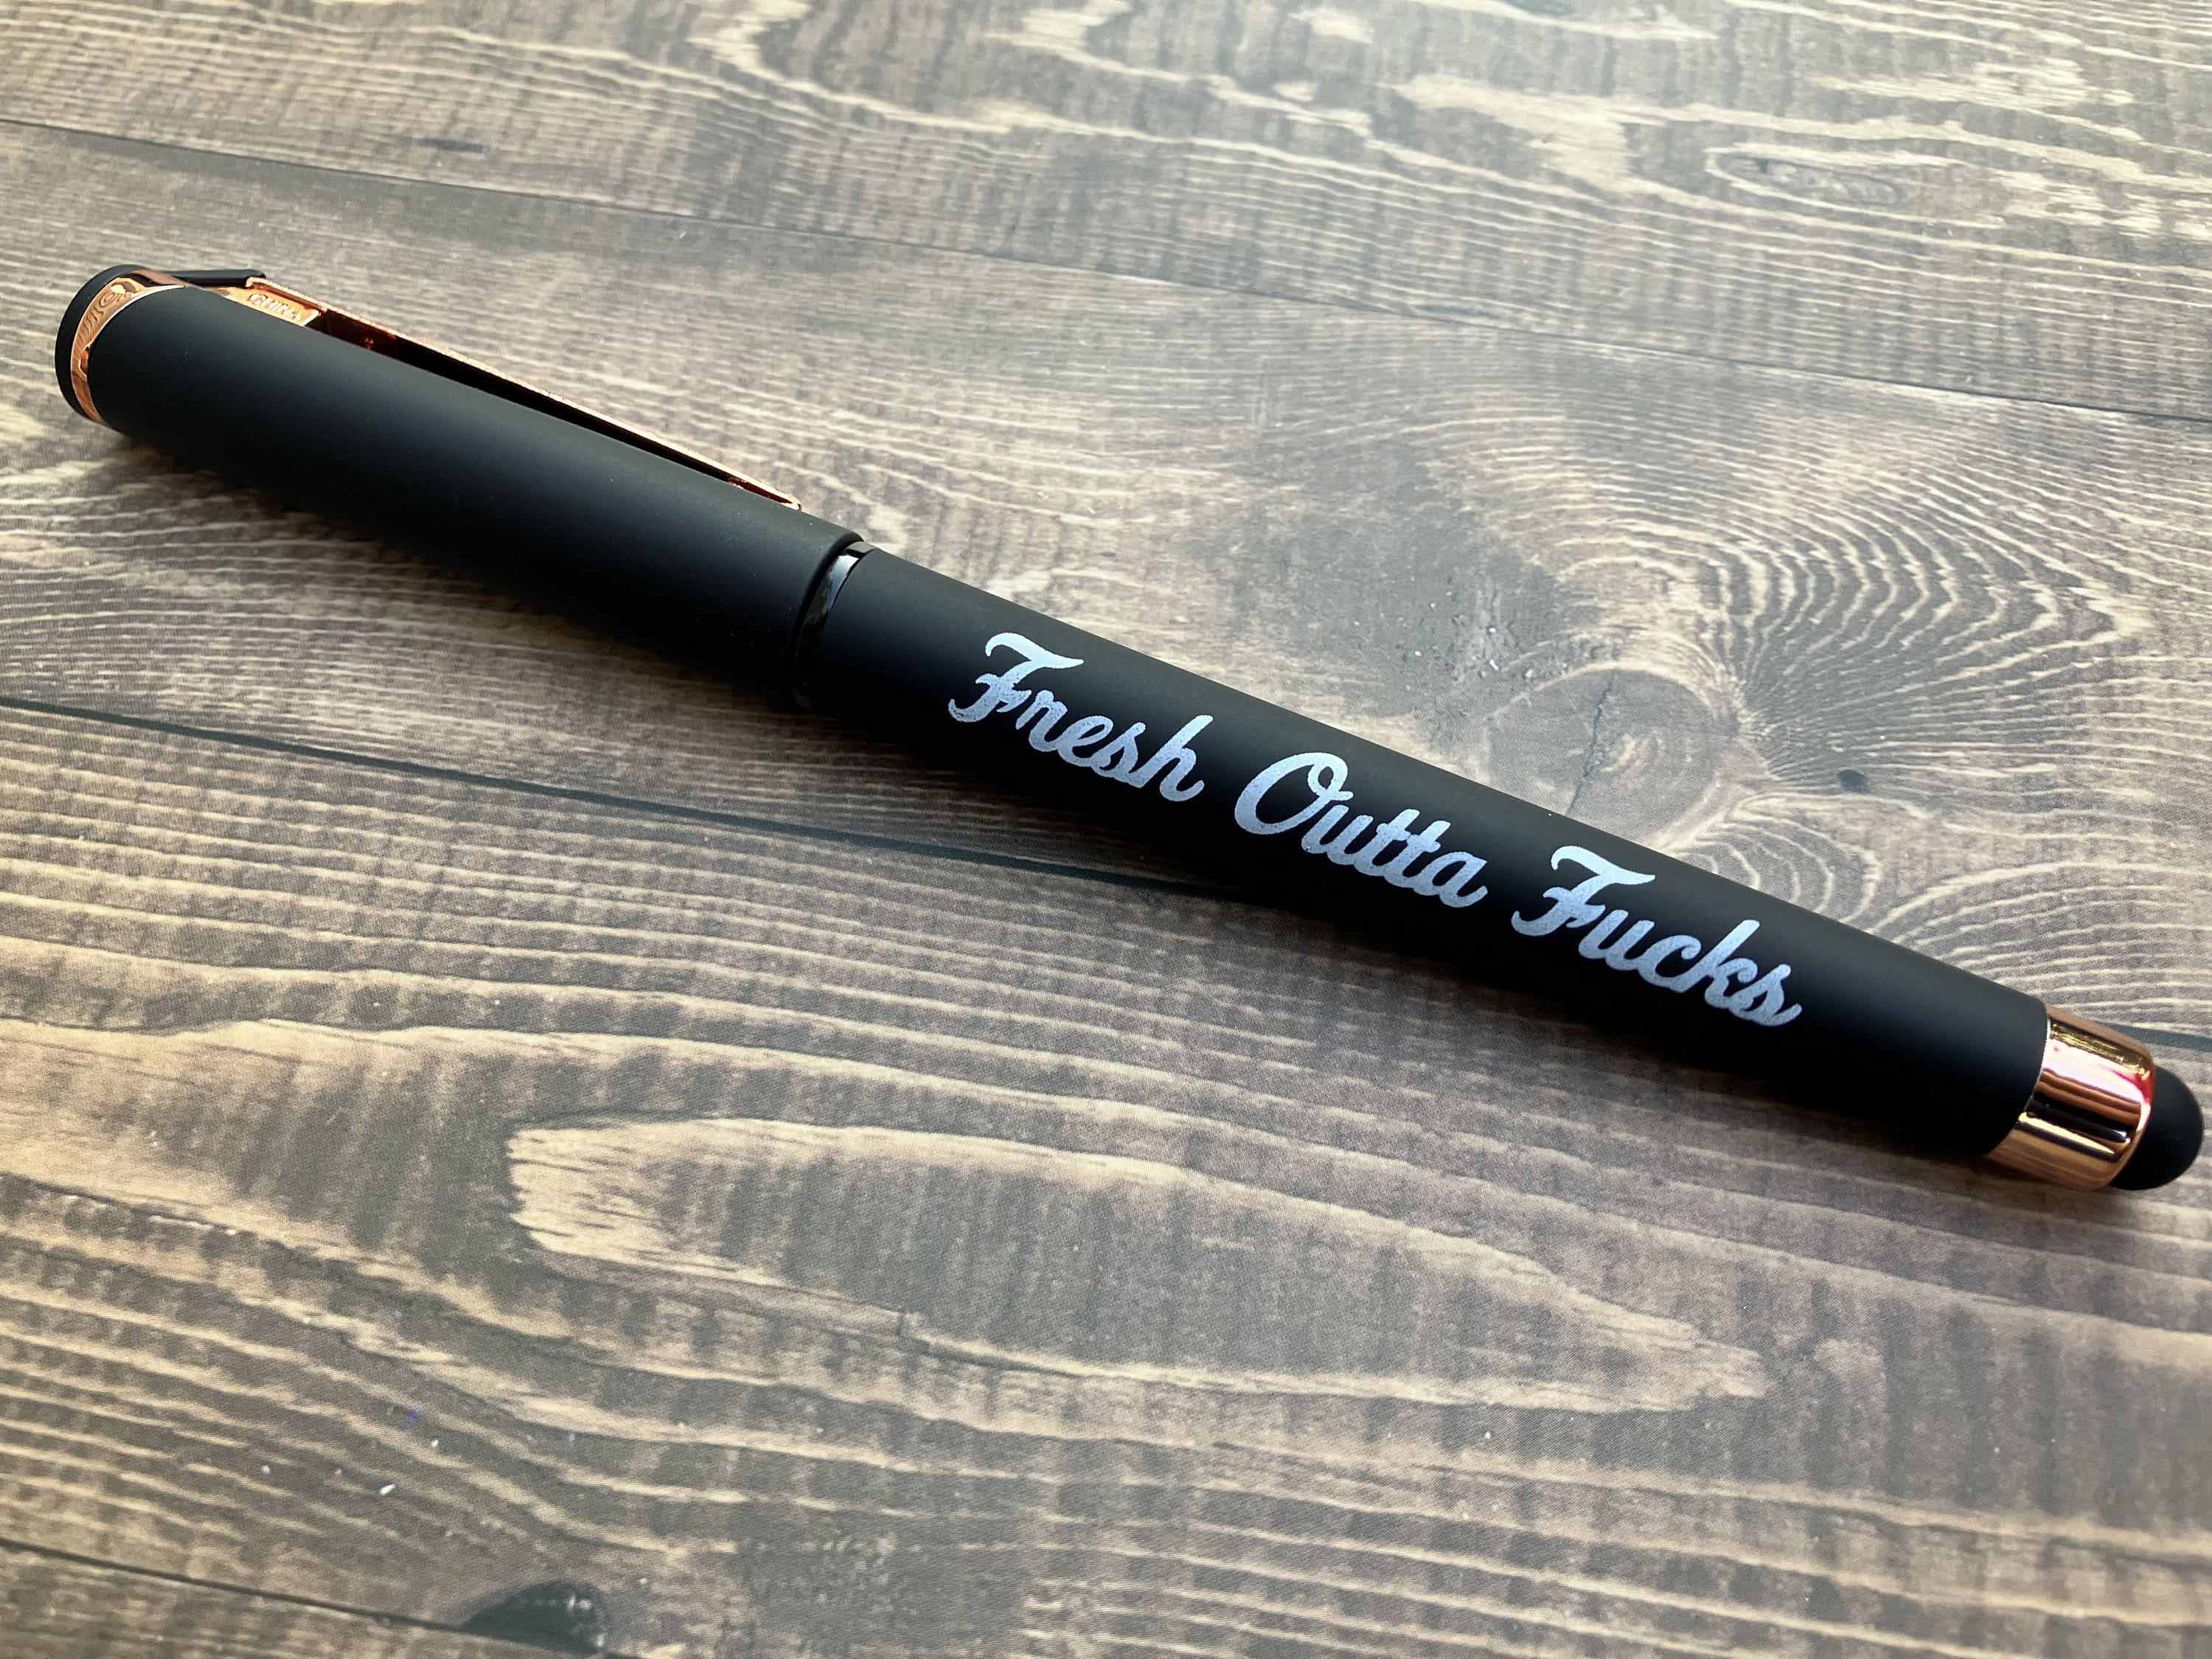  Fresh Outta Fucks Pad and Pen, Fresh Out of Fcks Pen